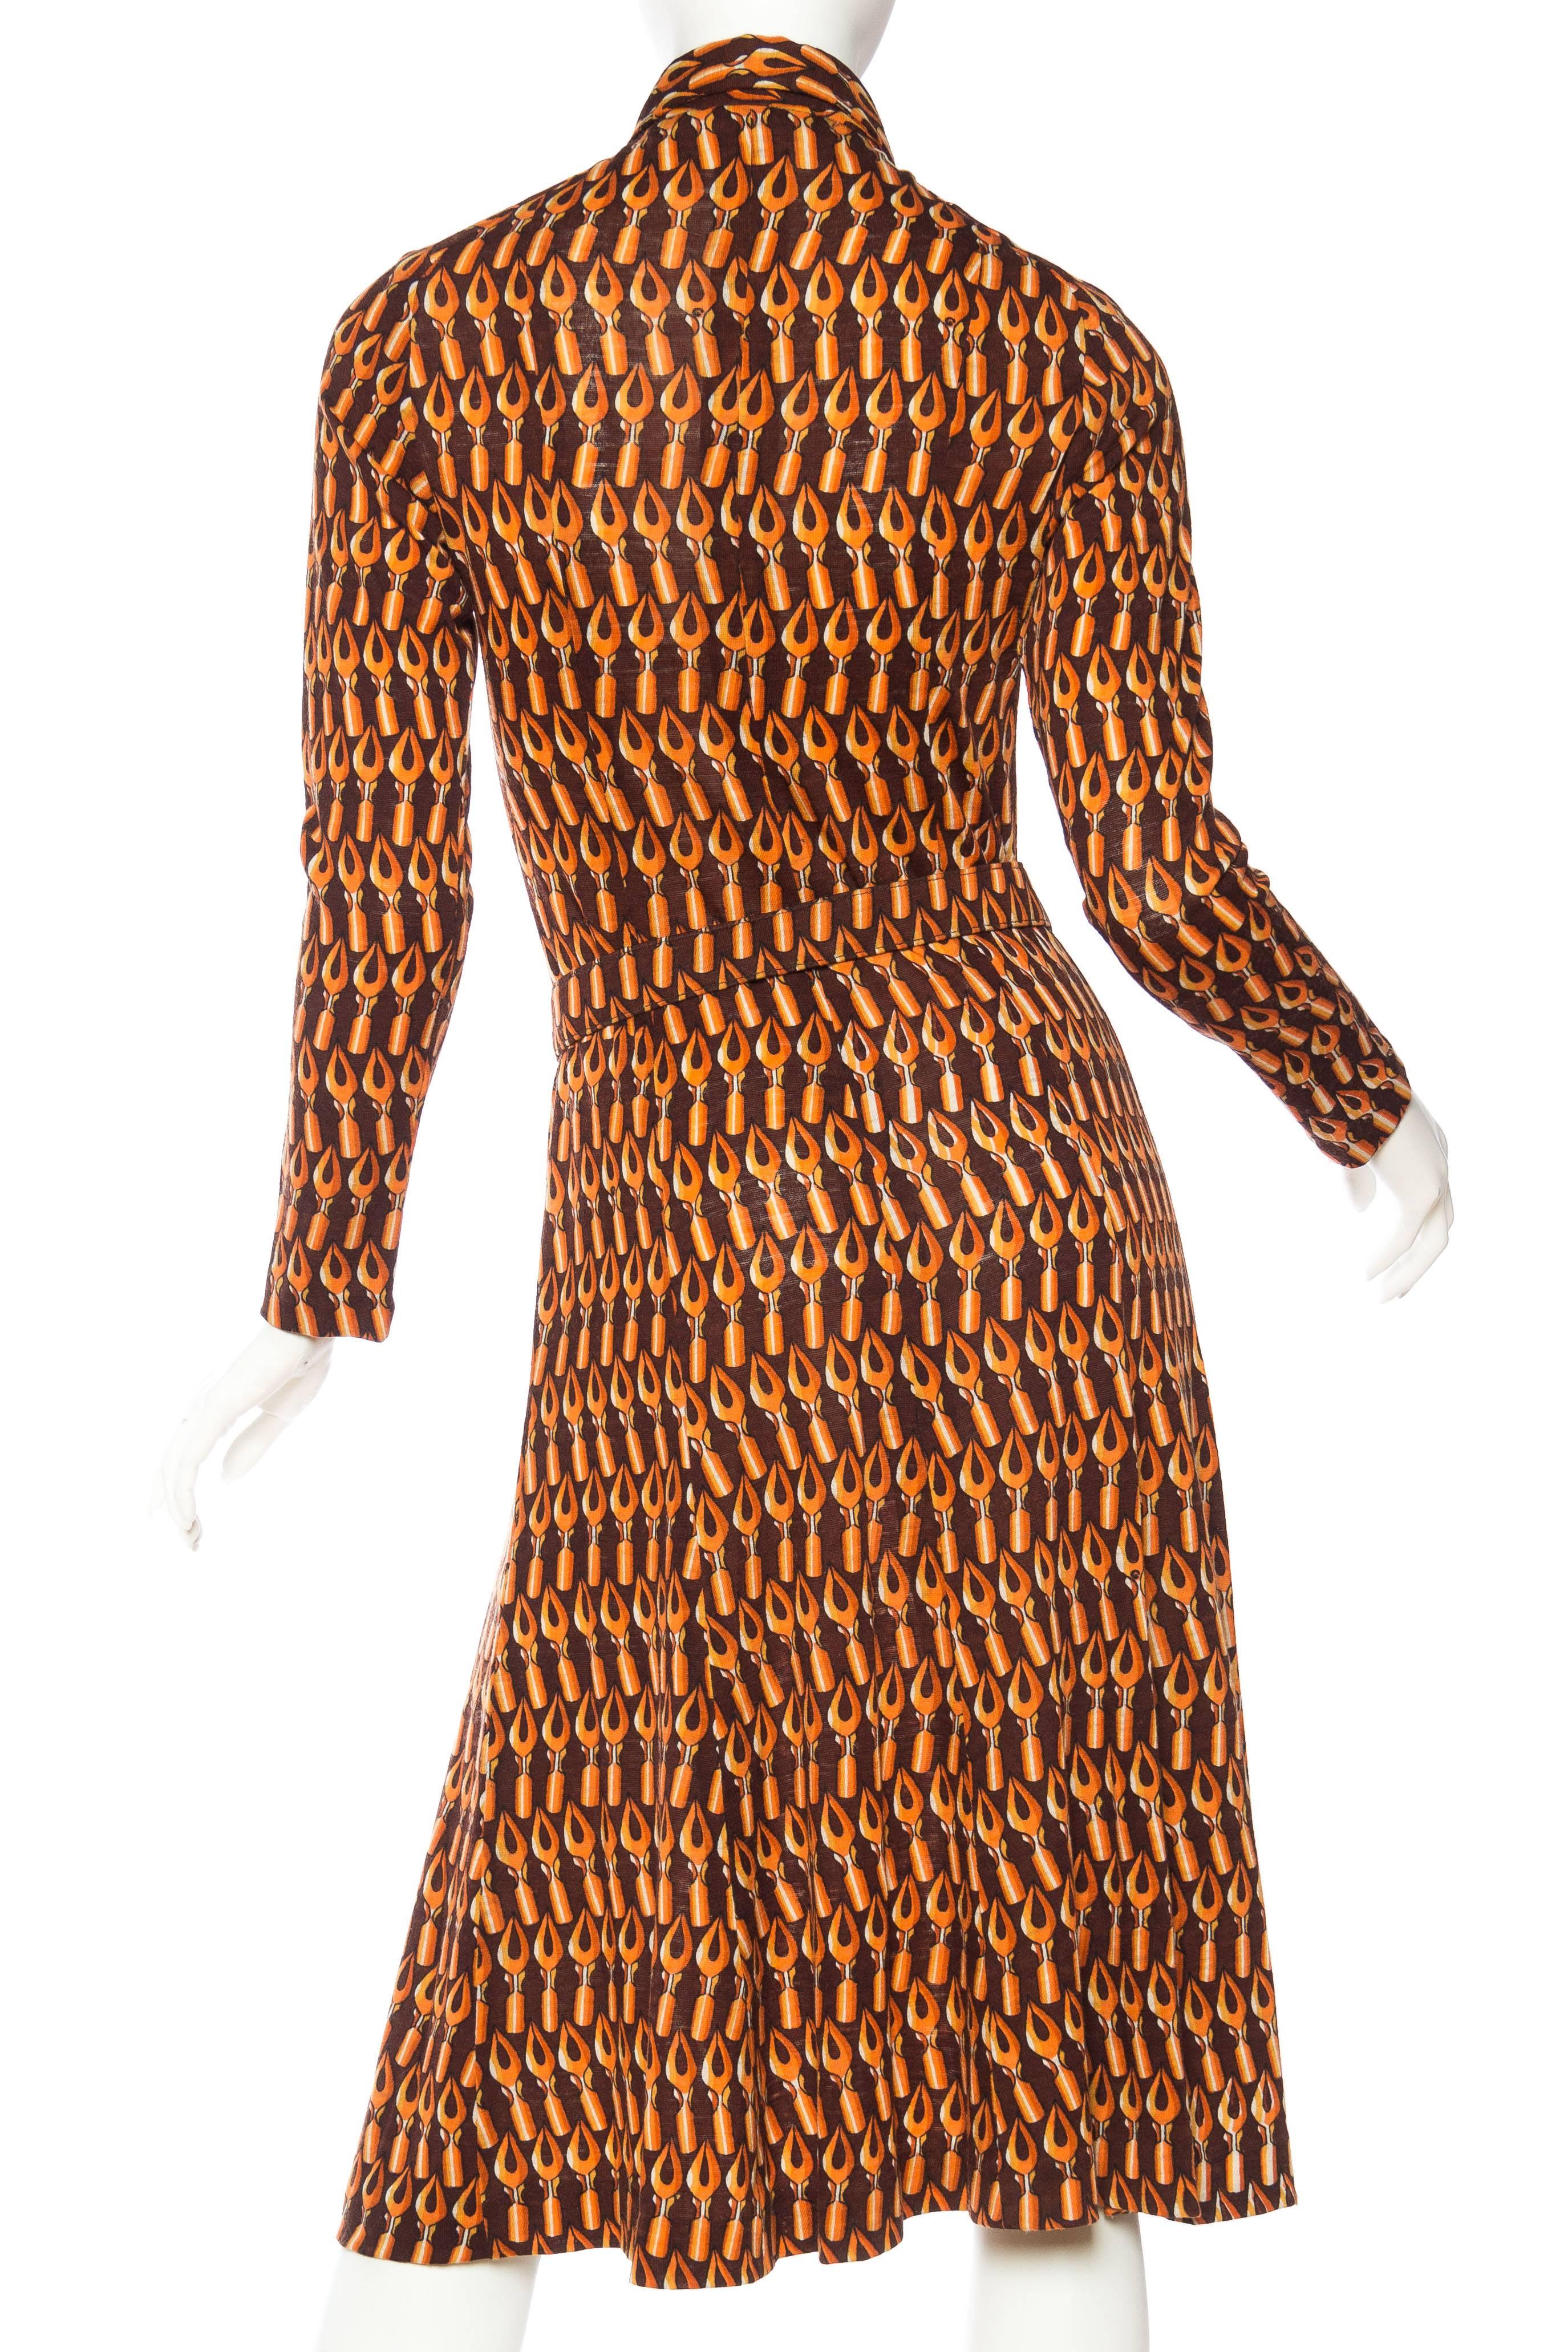 Women's 1970s Giovannozzi Italian Wool Jersey Dress for the Writer